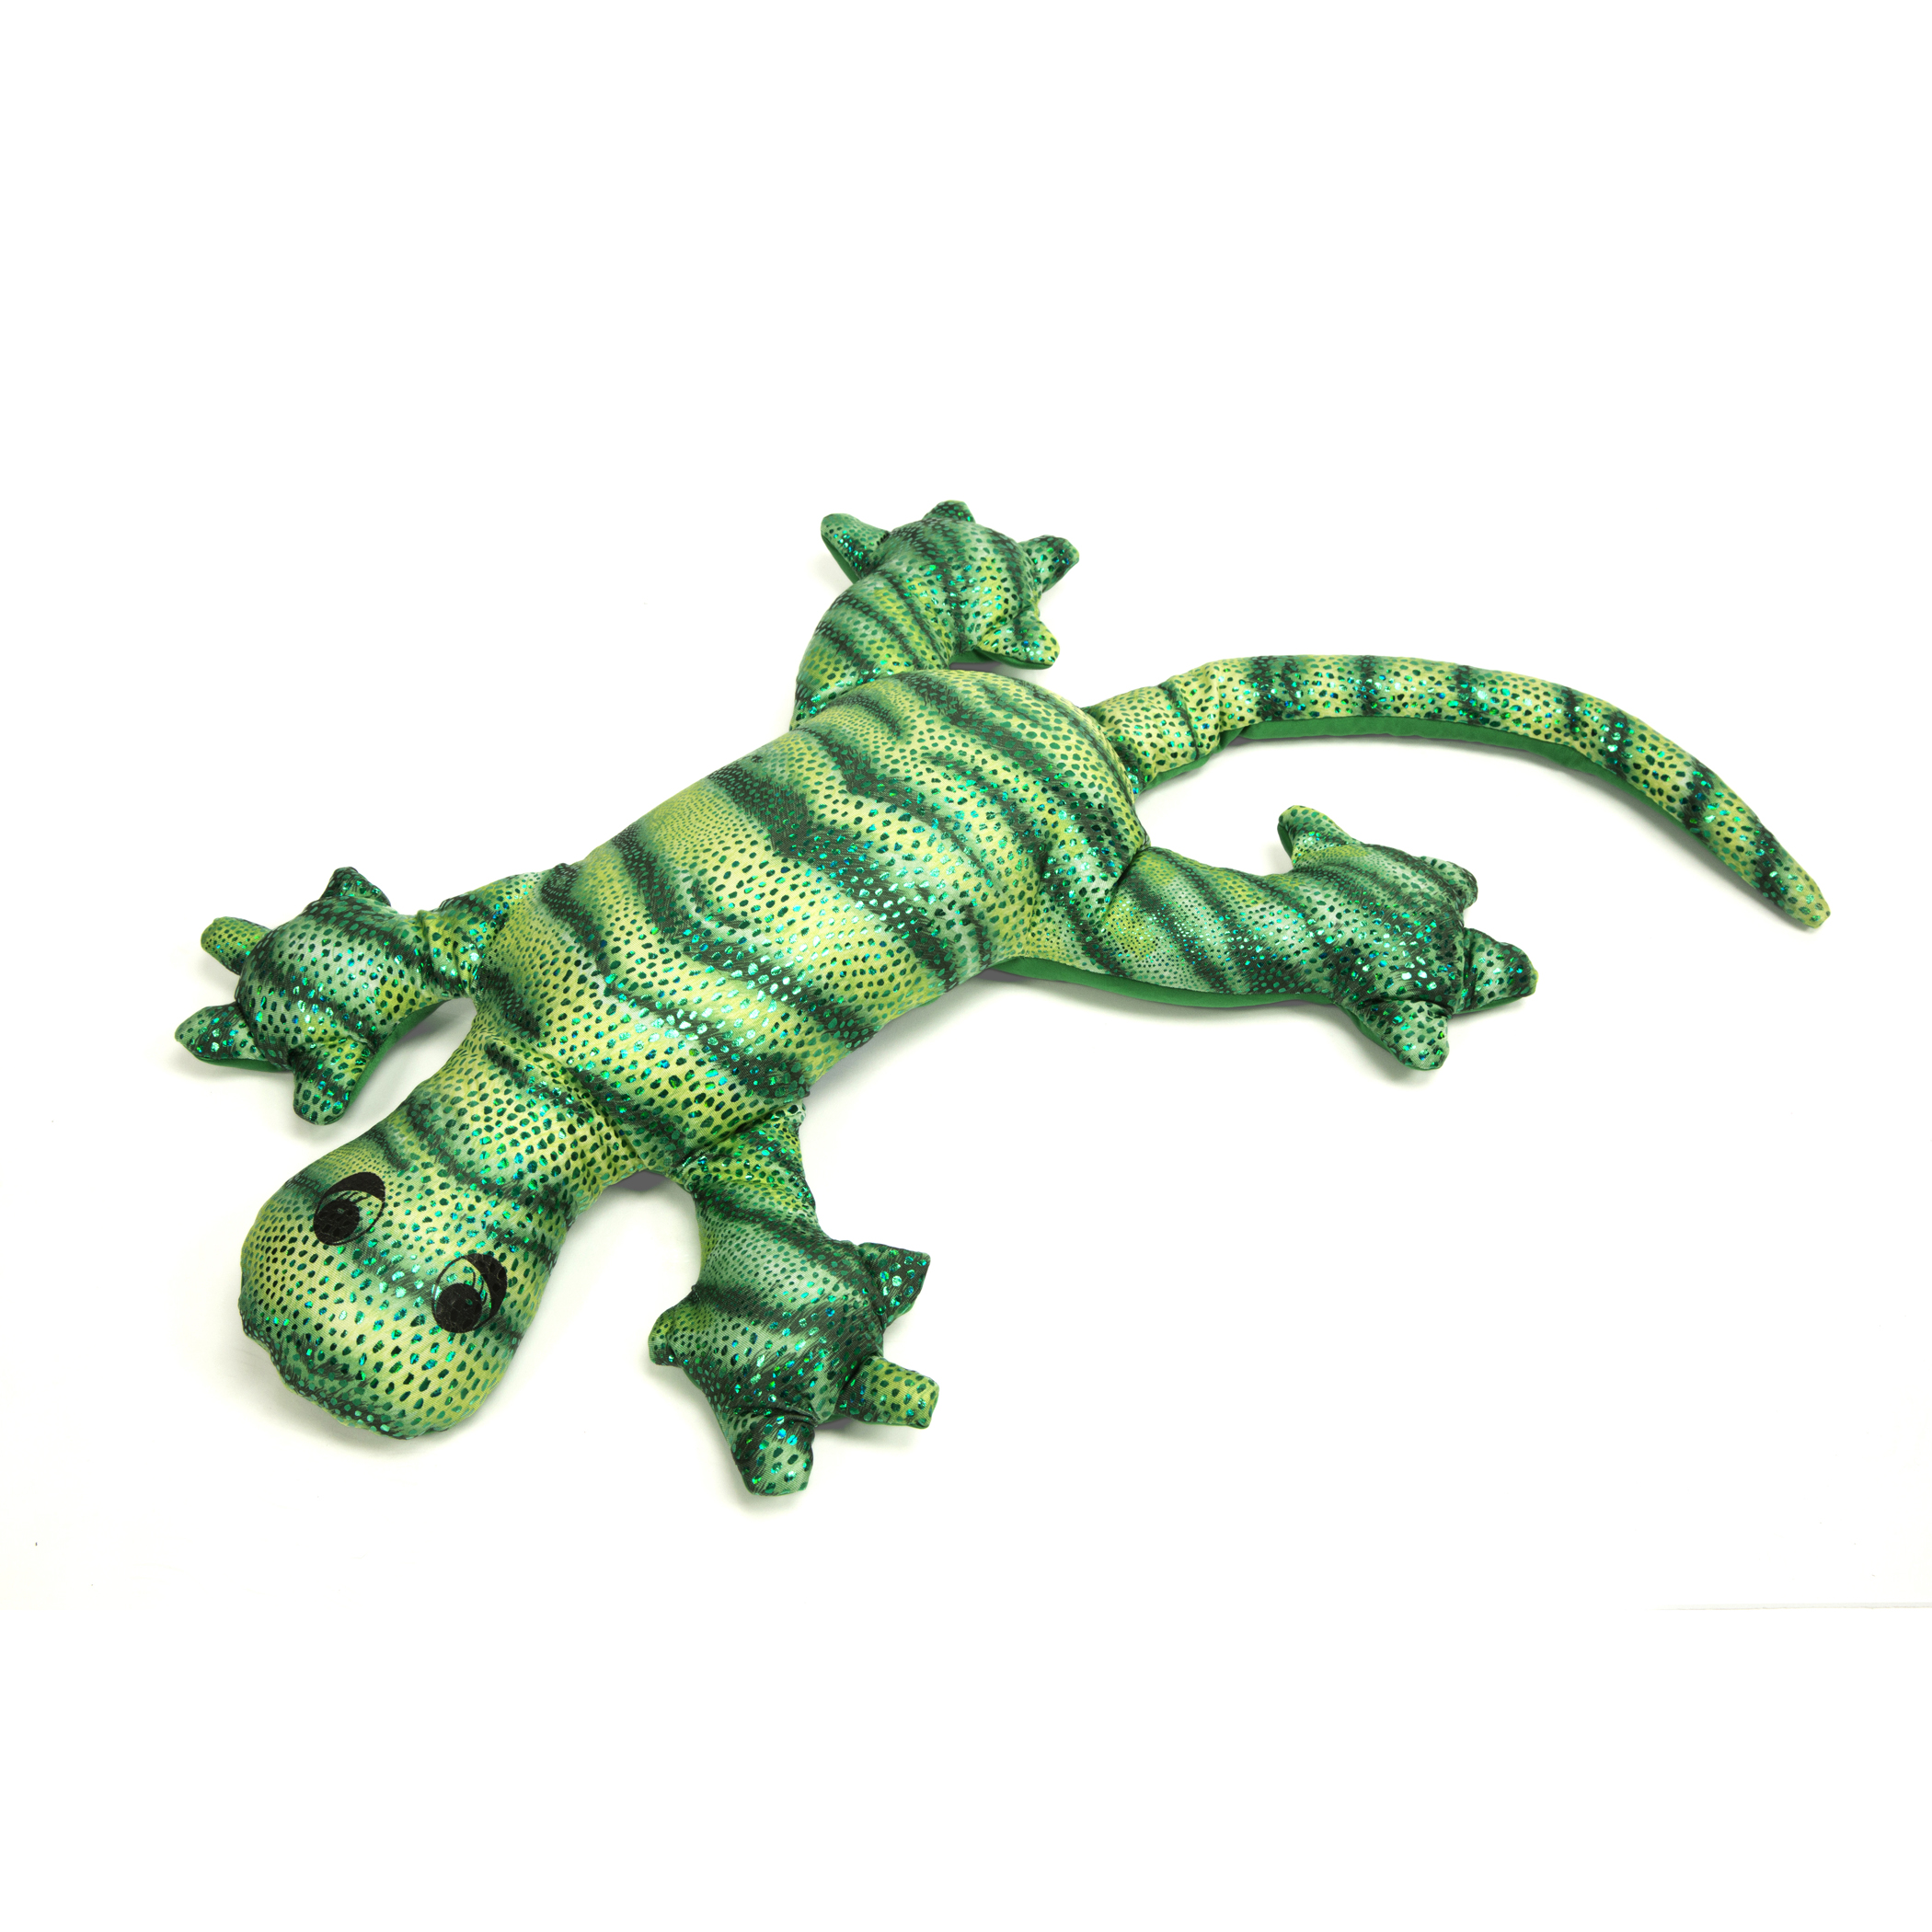 manimo manimo - Lizard Green 2 kg